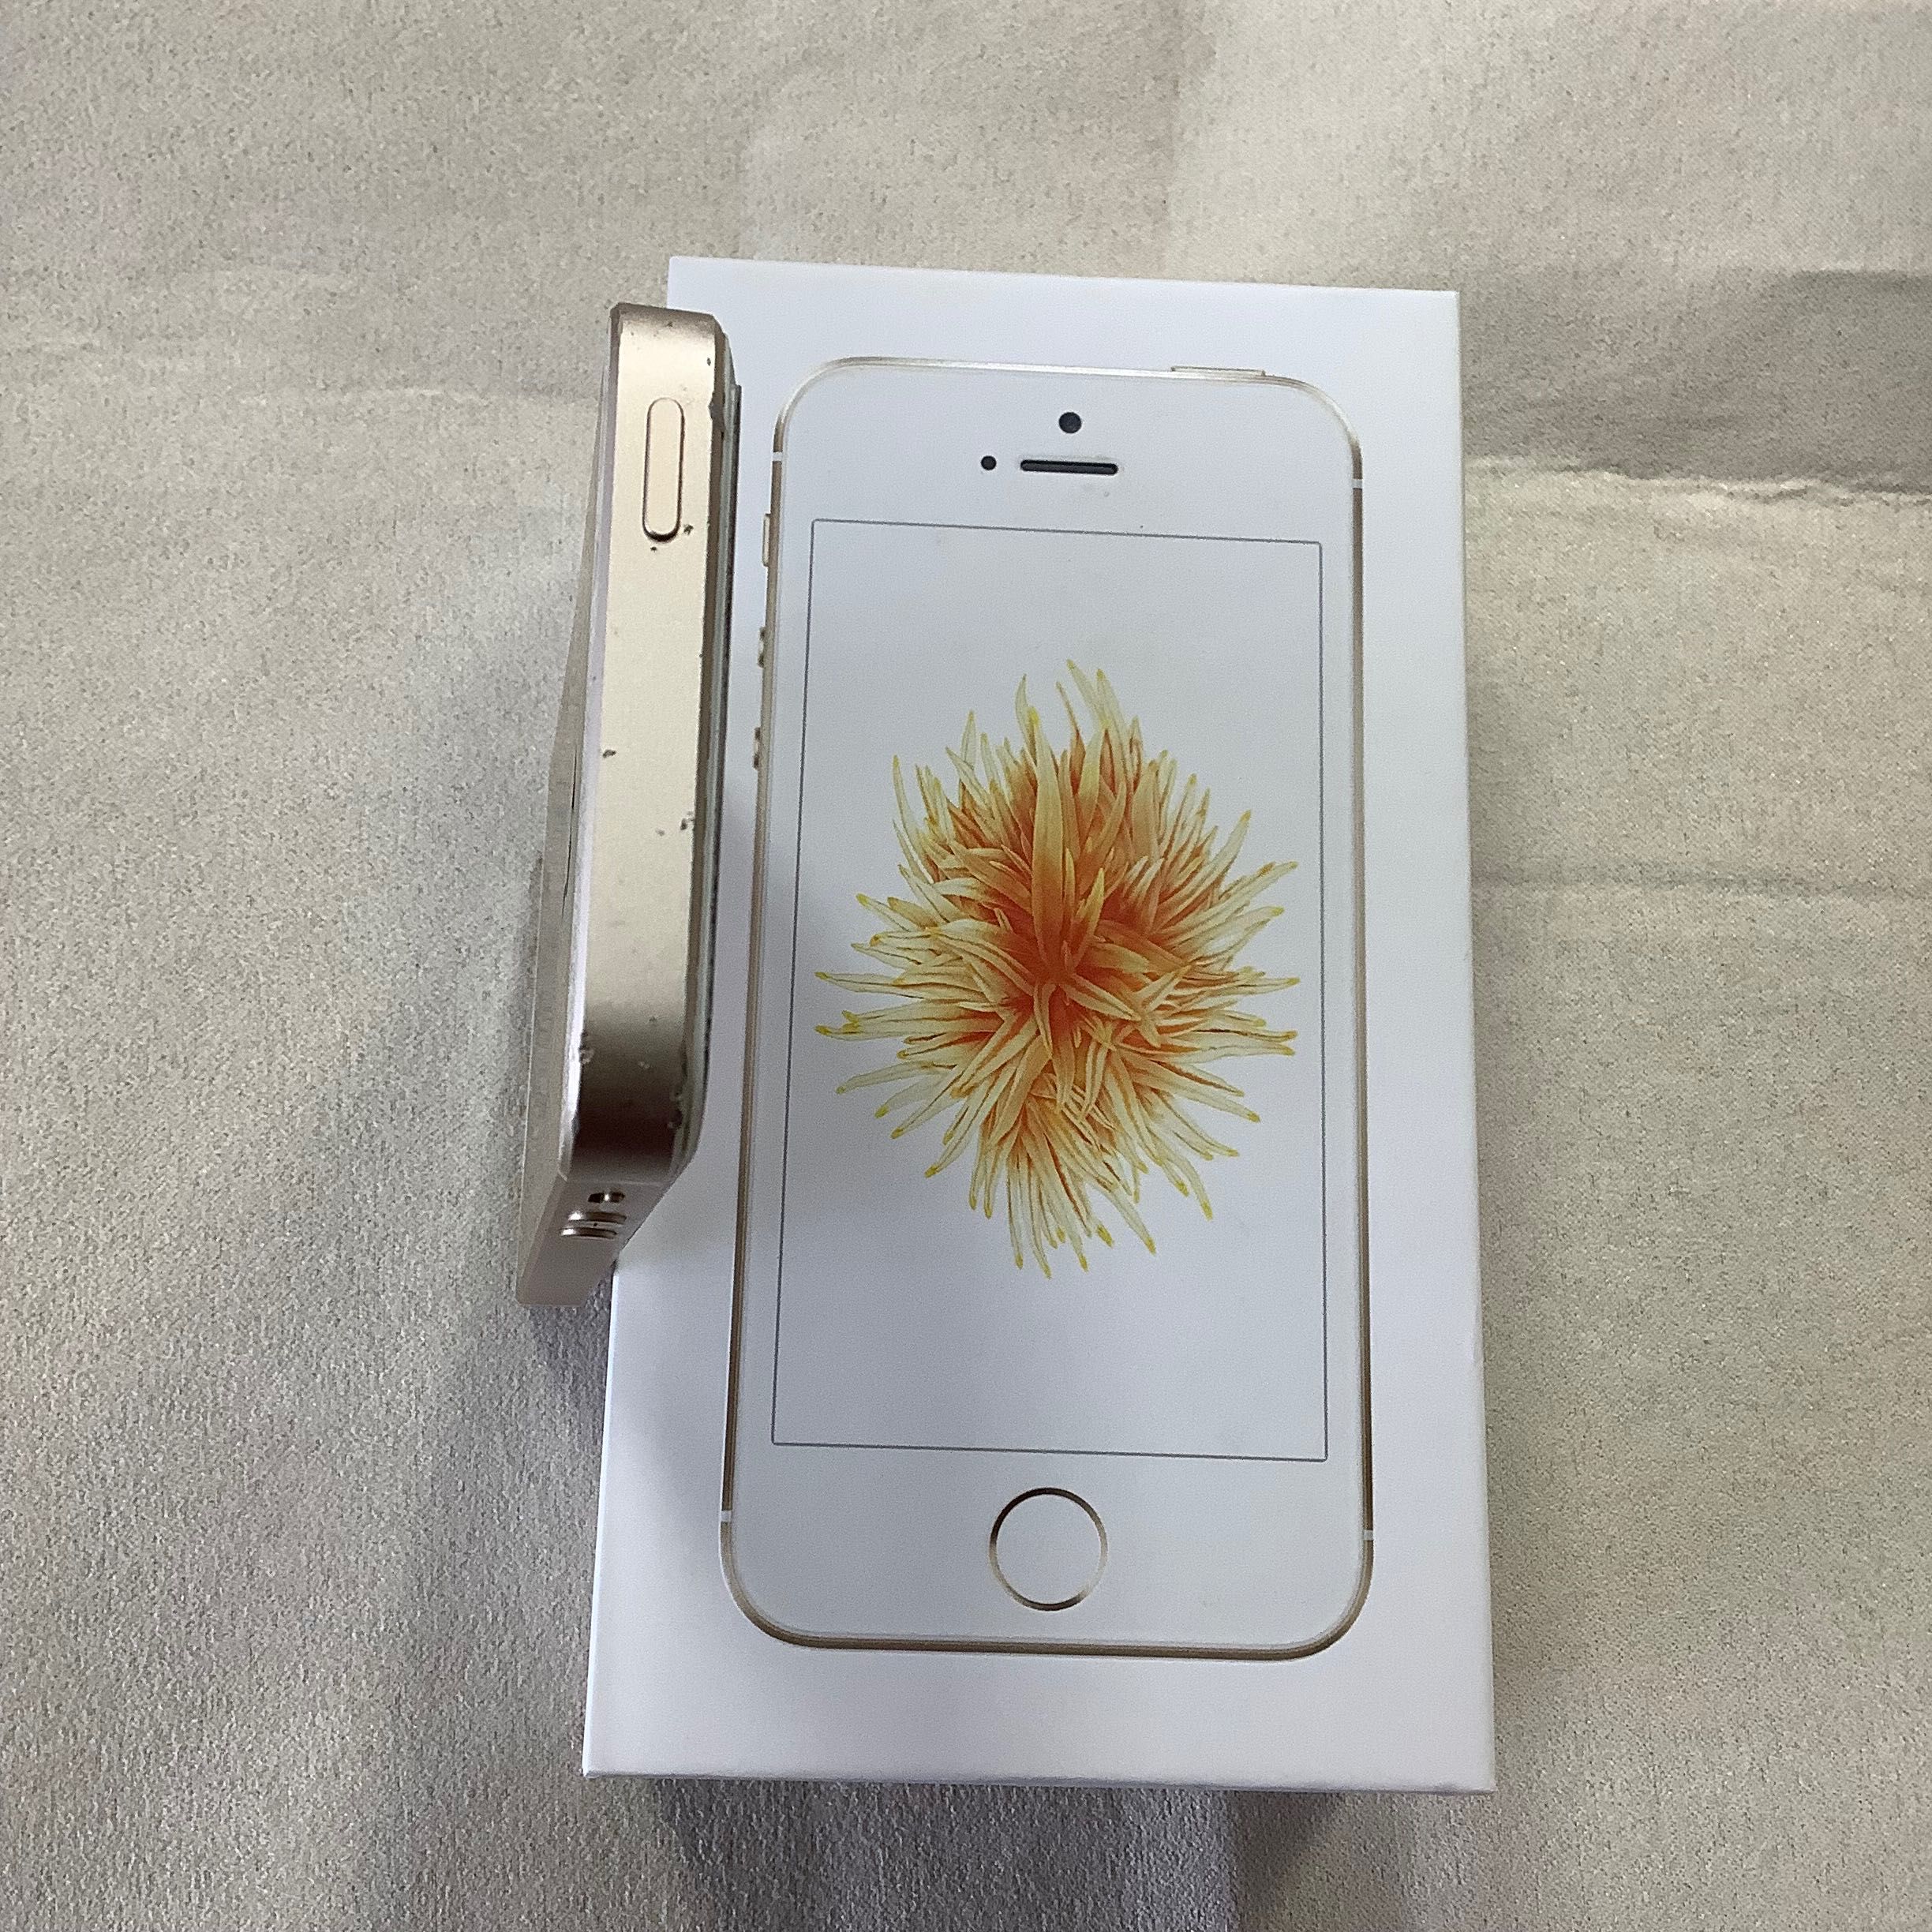 iPhone SE dourado 16 GB